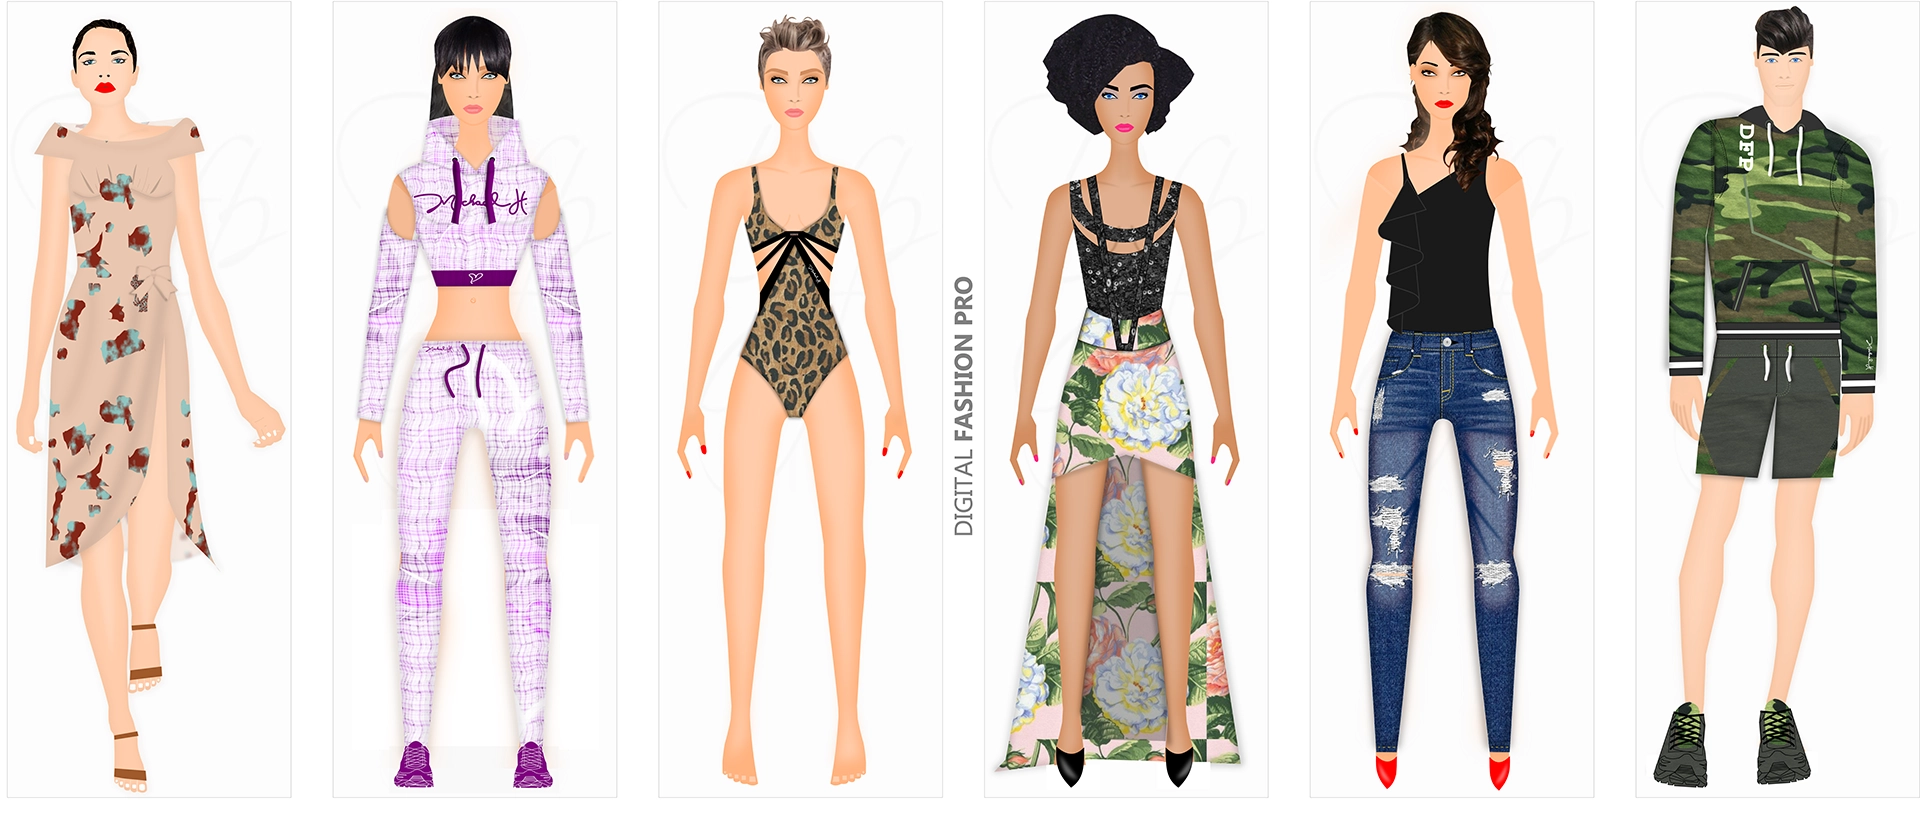 Digital Fashion Pro 9 - fashion design software - how to design clothing